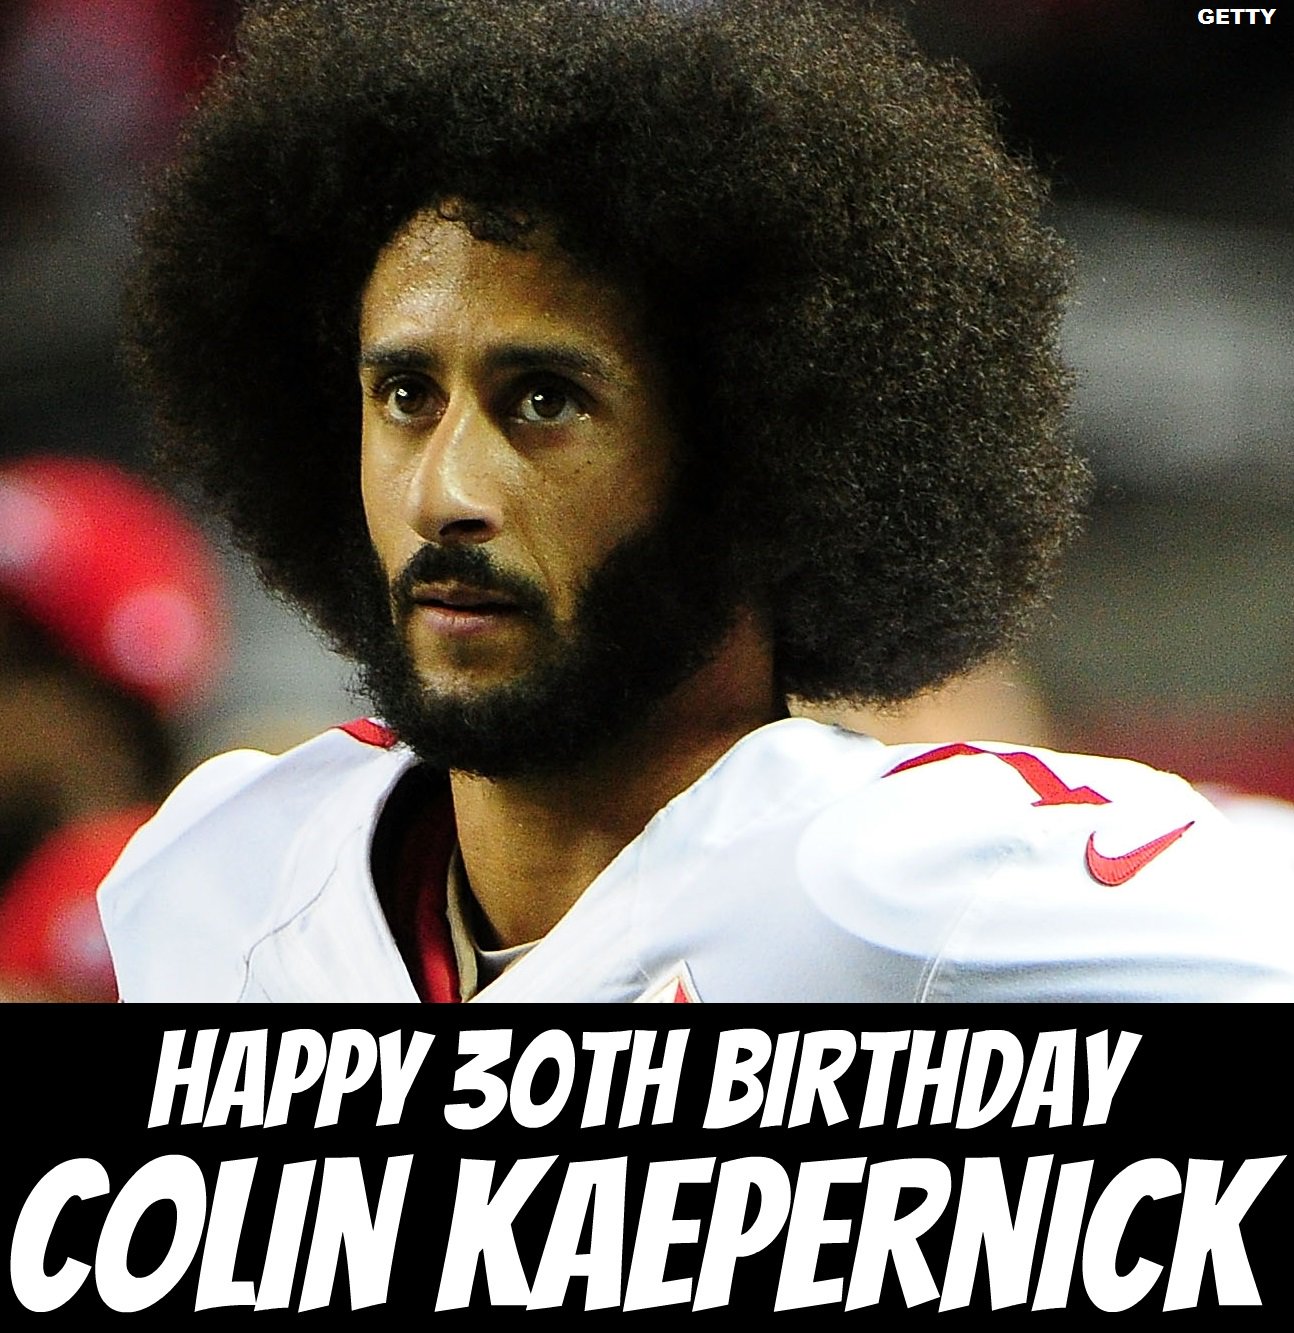 Happy birthday to former NFL quarterback Colin Kaepernick 